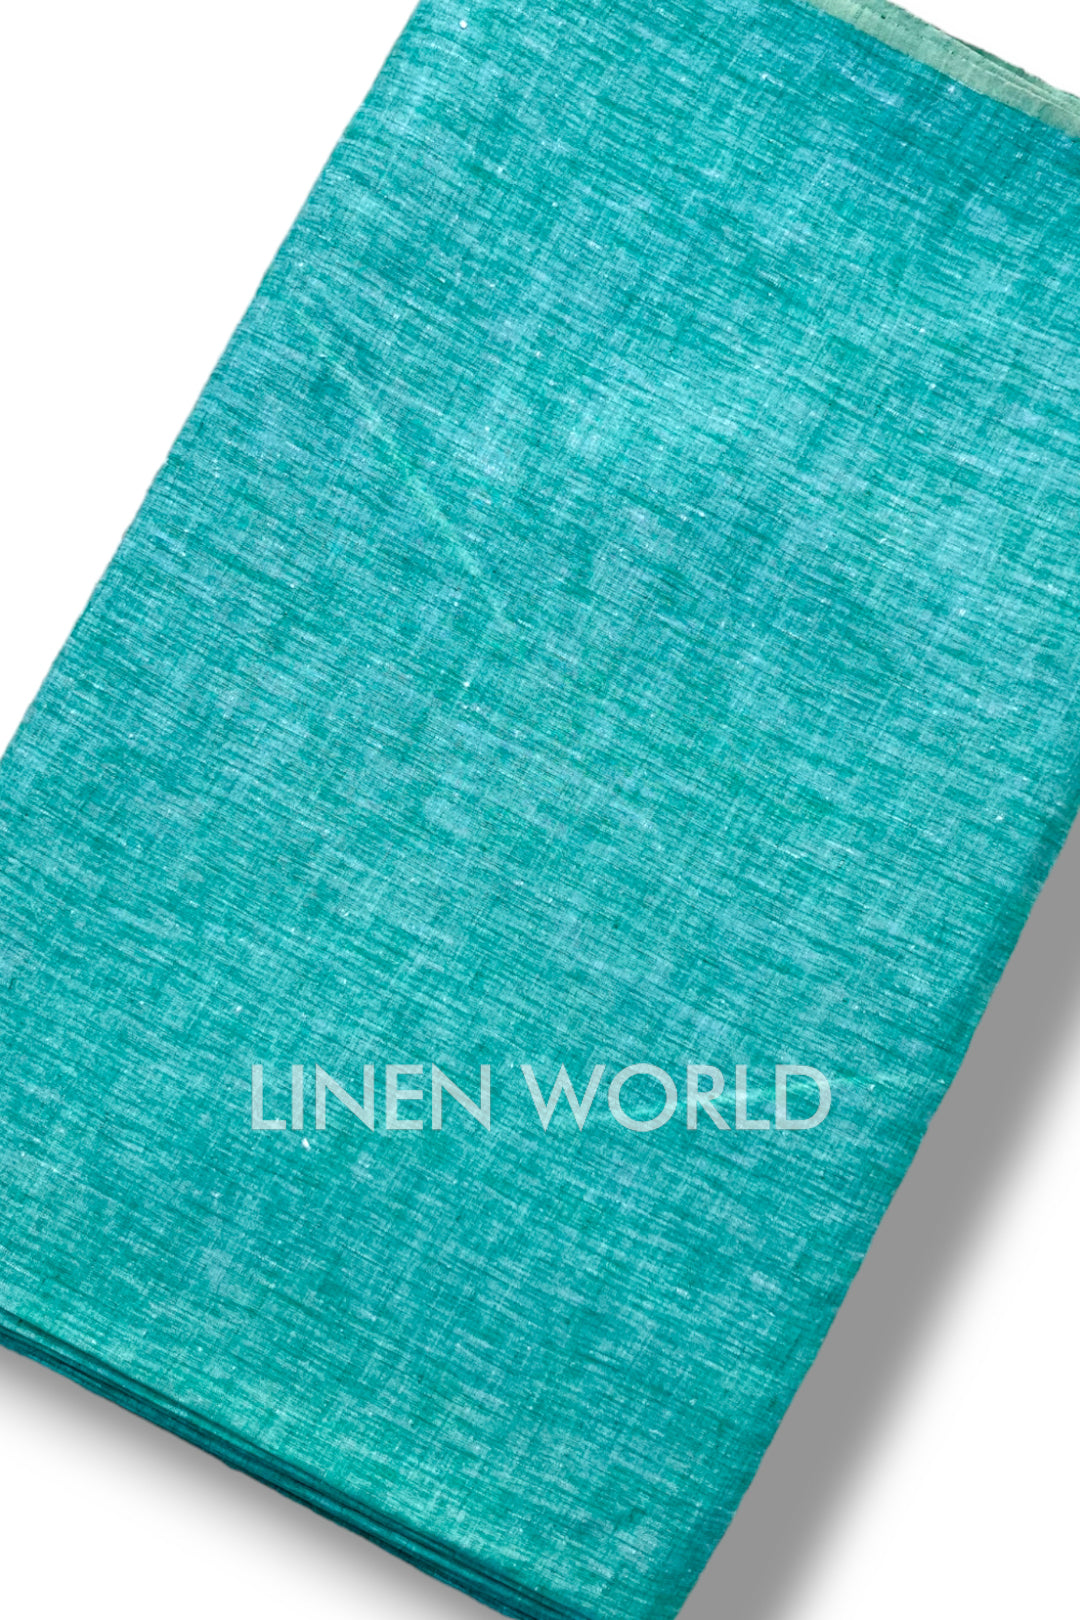 sea green pure linen 60 lea shirting fabric - linenworldonline.in